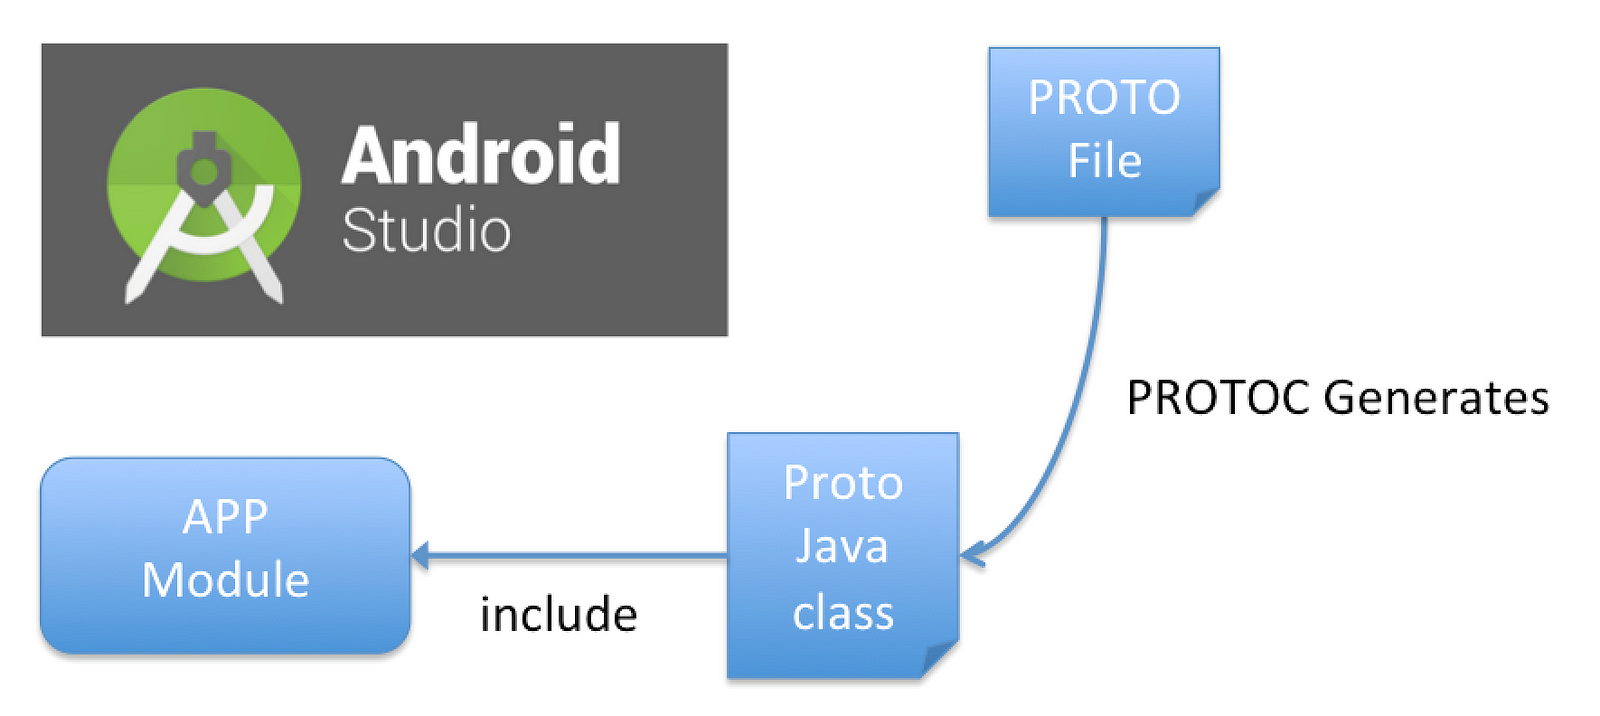 Android Protobuf Tutorial with example app - Elye - Medium